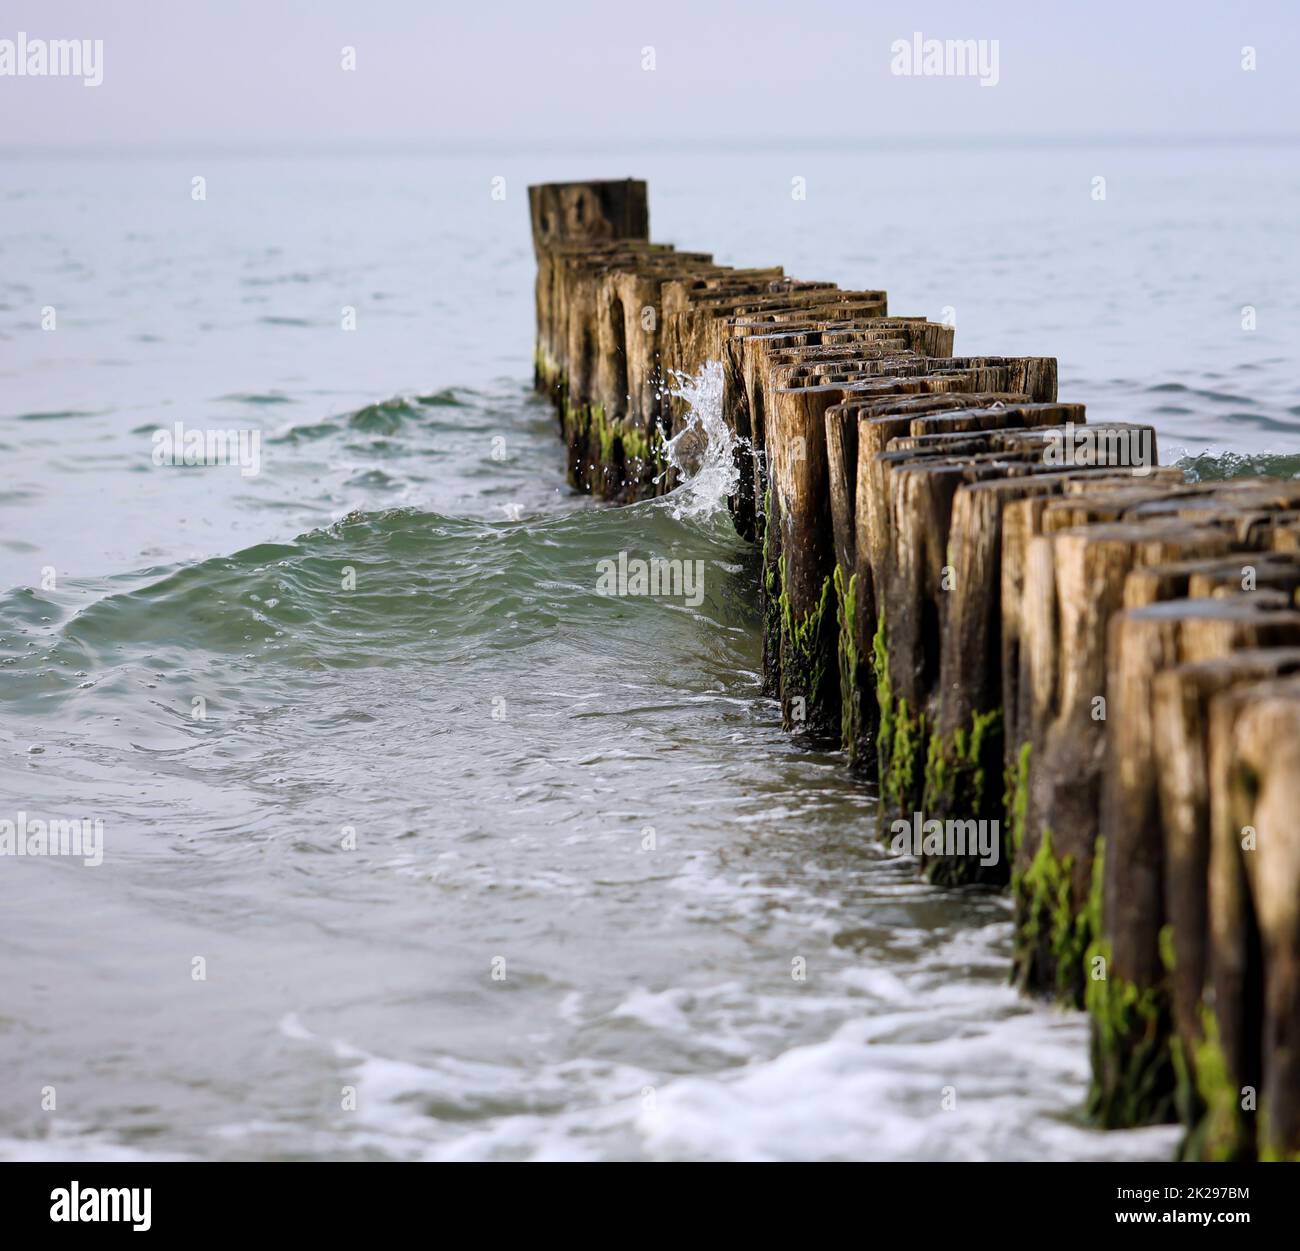 Groynes as coastal protection on the beach of the Baltic Sea. Stock Photo